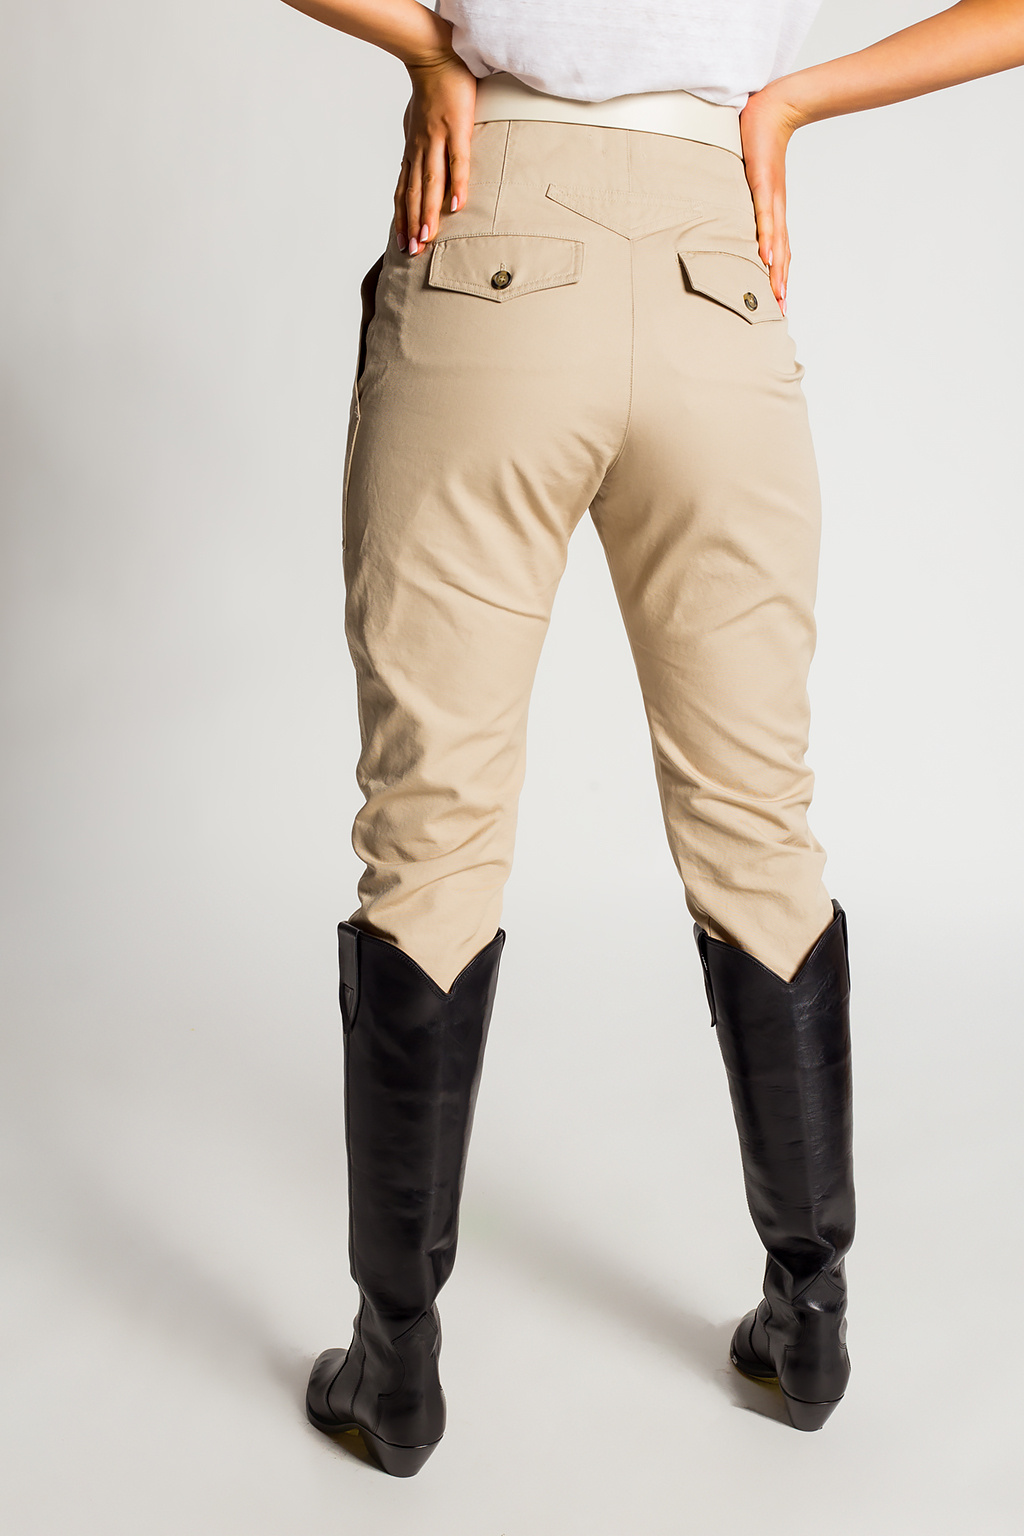 Isabel Marant Etoile High-waisted leggings trousers